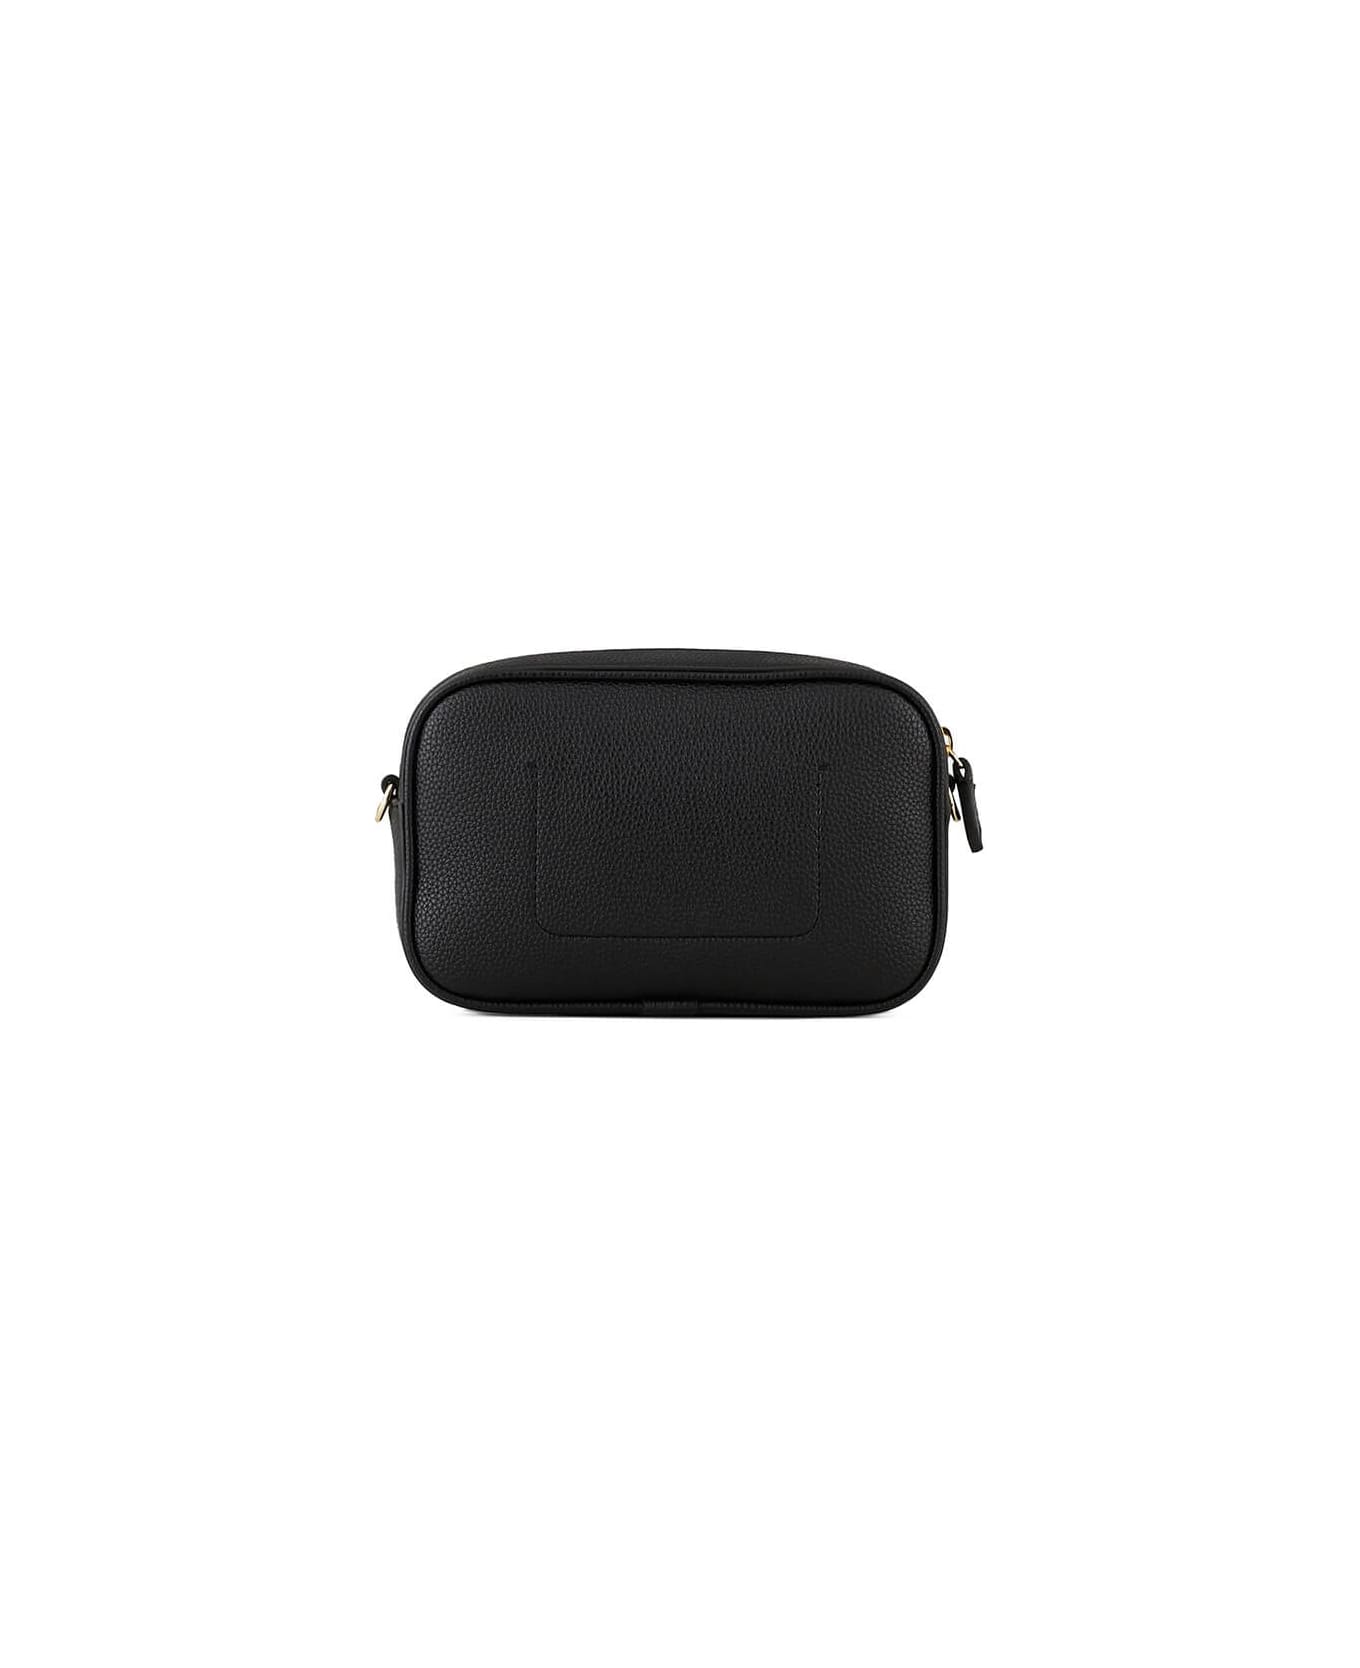 Emporio Armani Black Camera Bag - BLACK